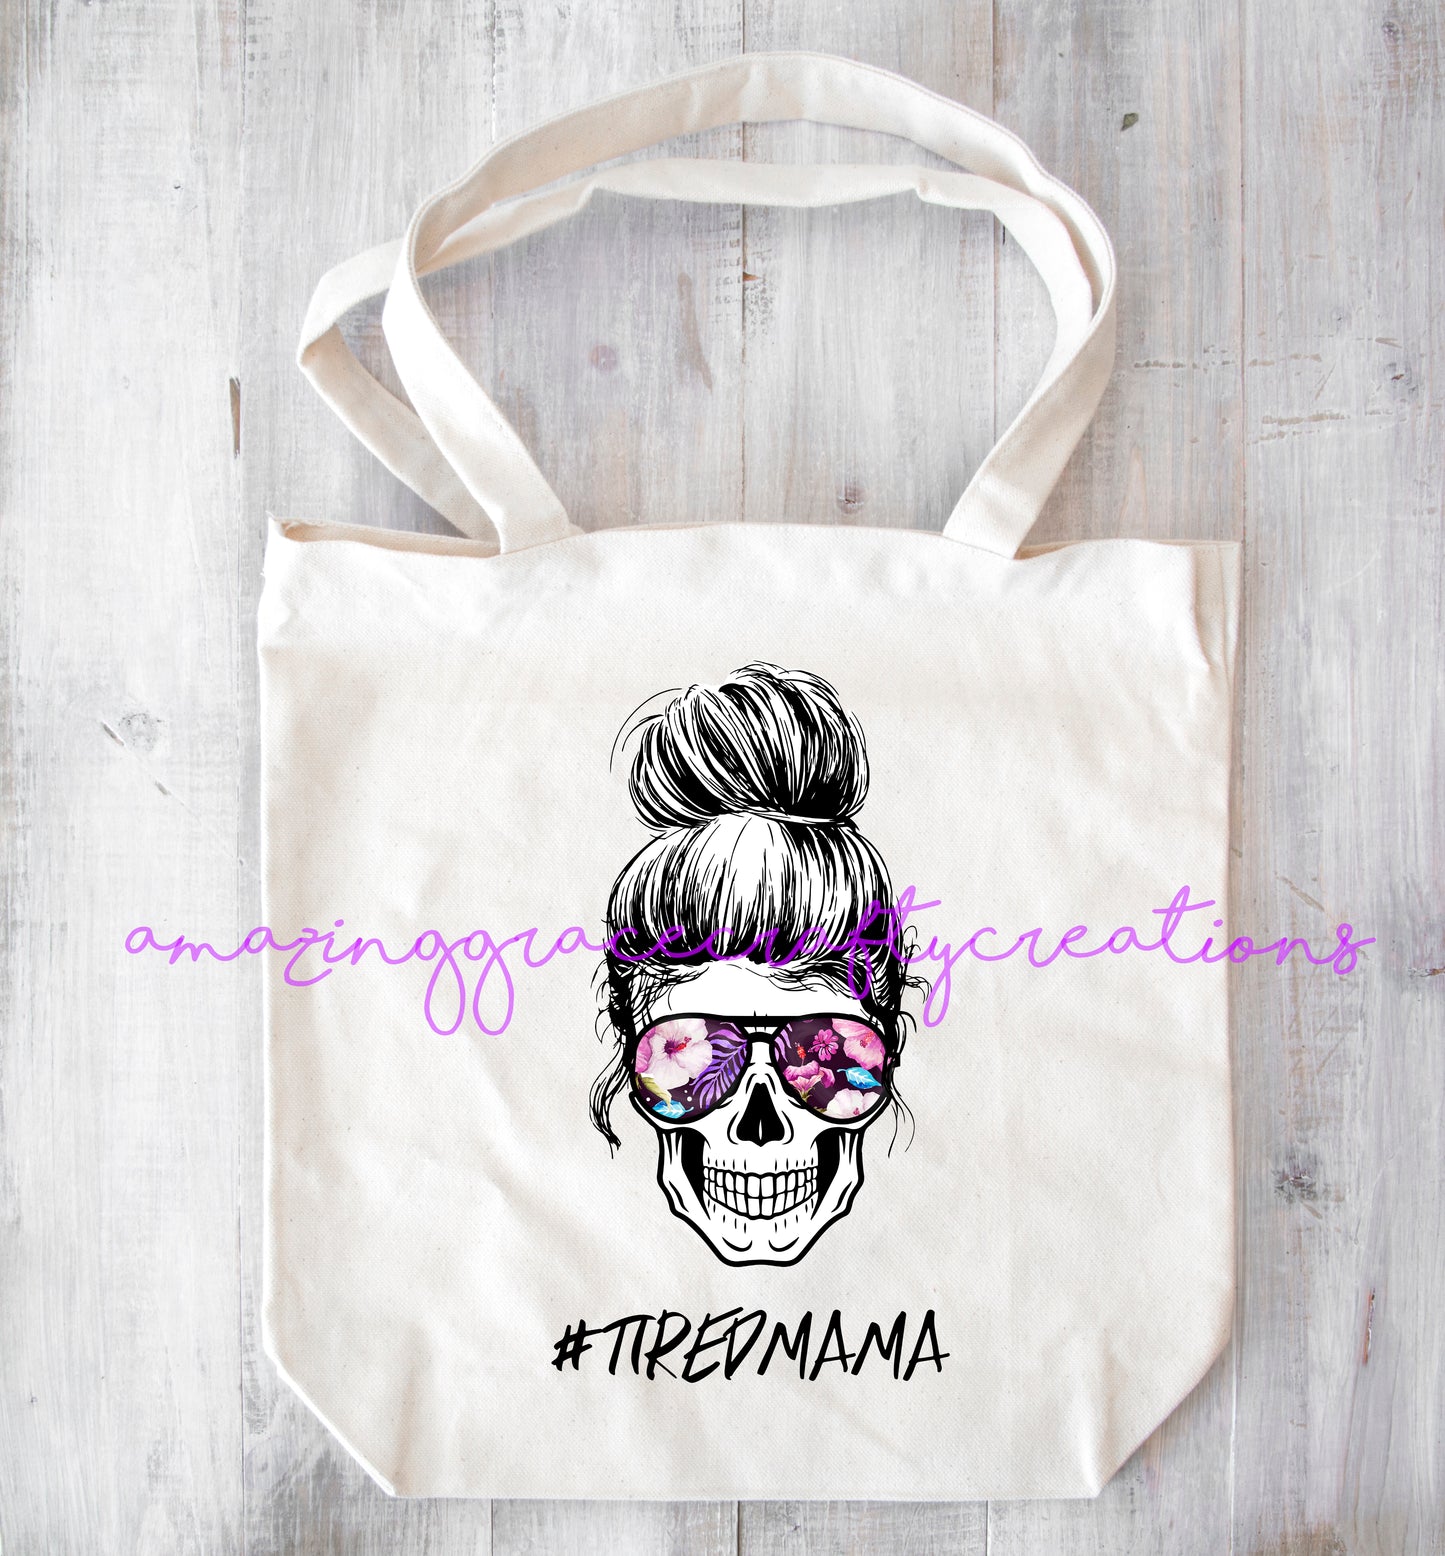 "Tired Mama" design tote bag